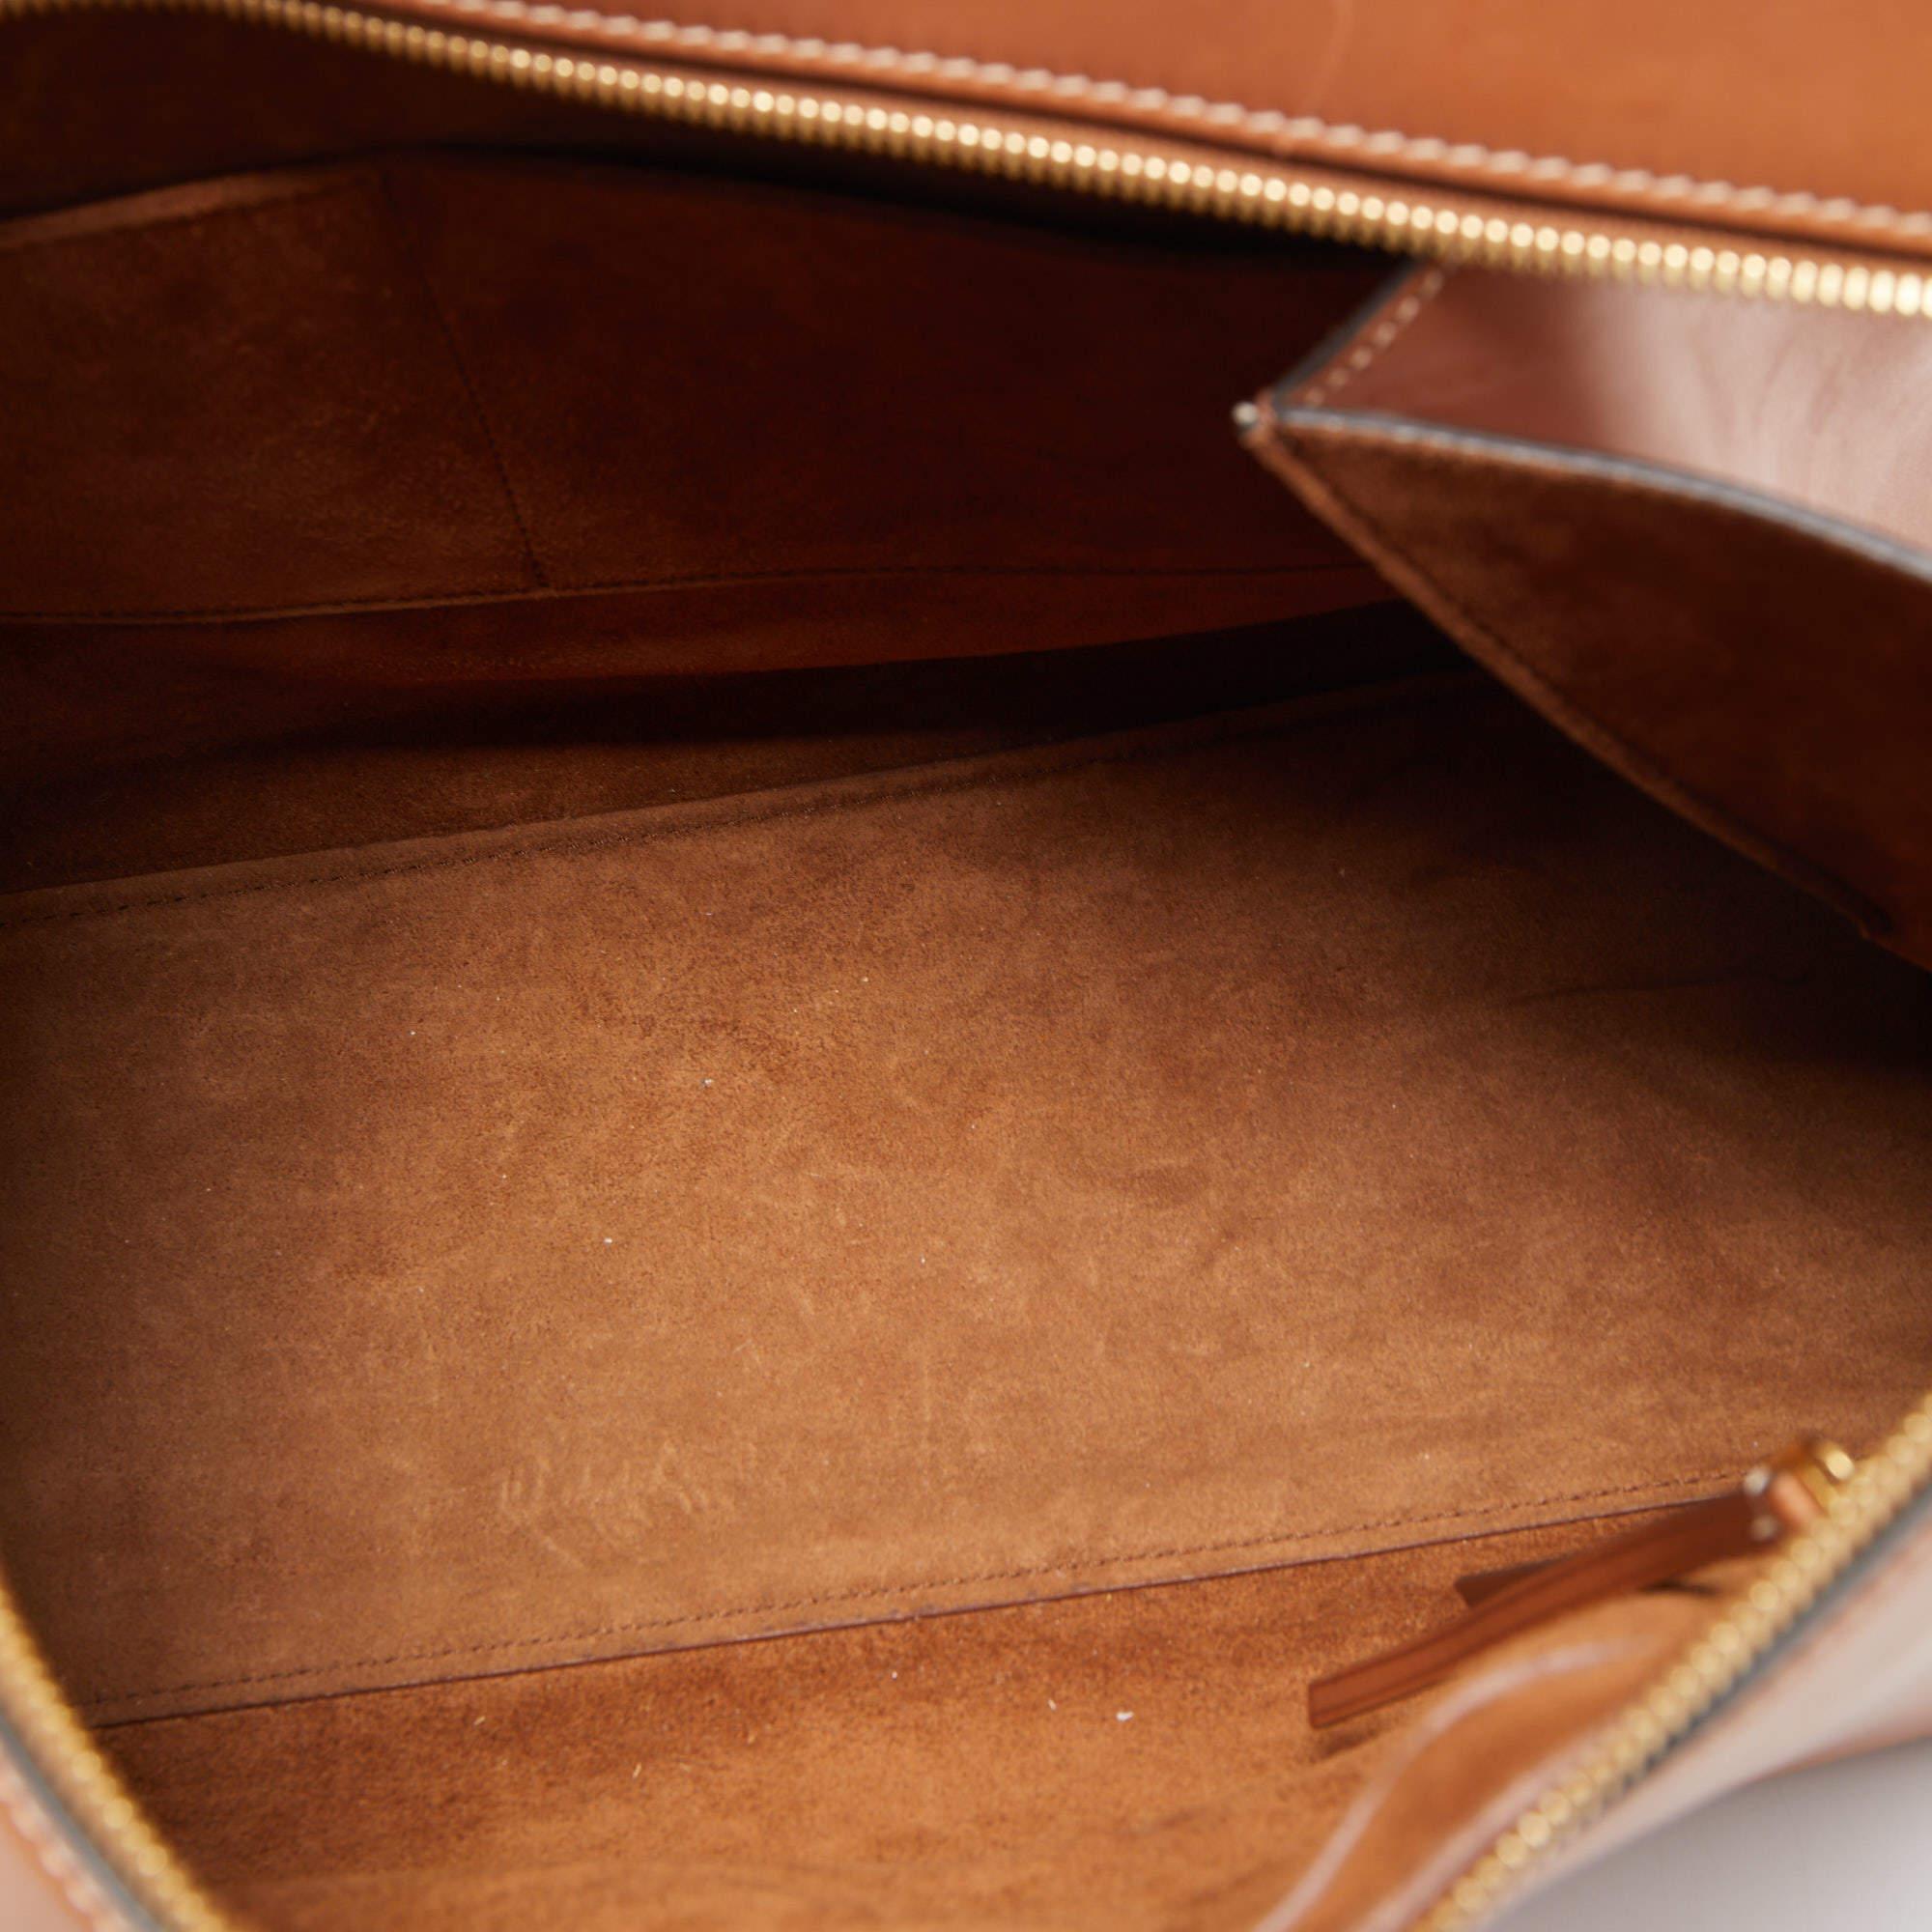 Celine Tan Leather Medium Edge Top Handle Bag 6